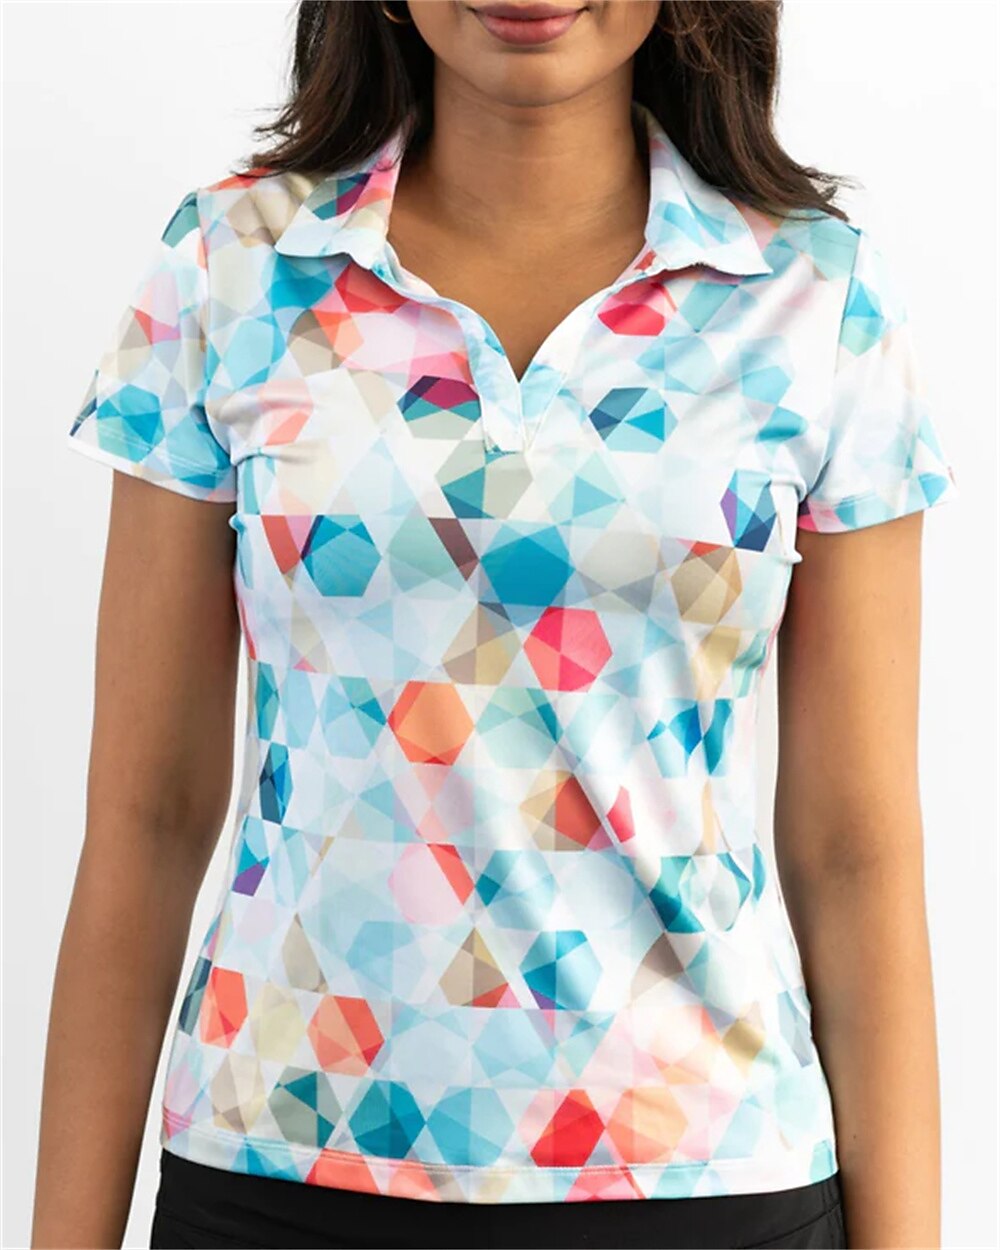 Men's Women's Matching polo Polo Shirt golf apparel Breathable Quick Dry Lightweight Short Sleeve Top Geometry Summer Golf